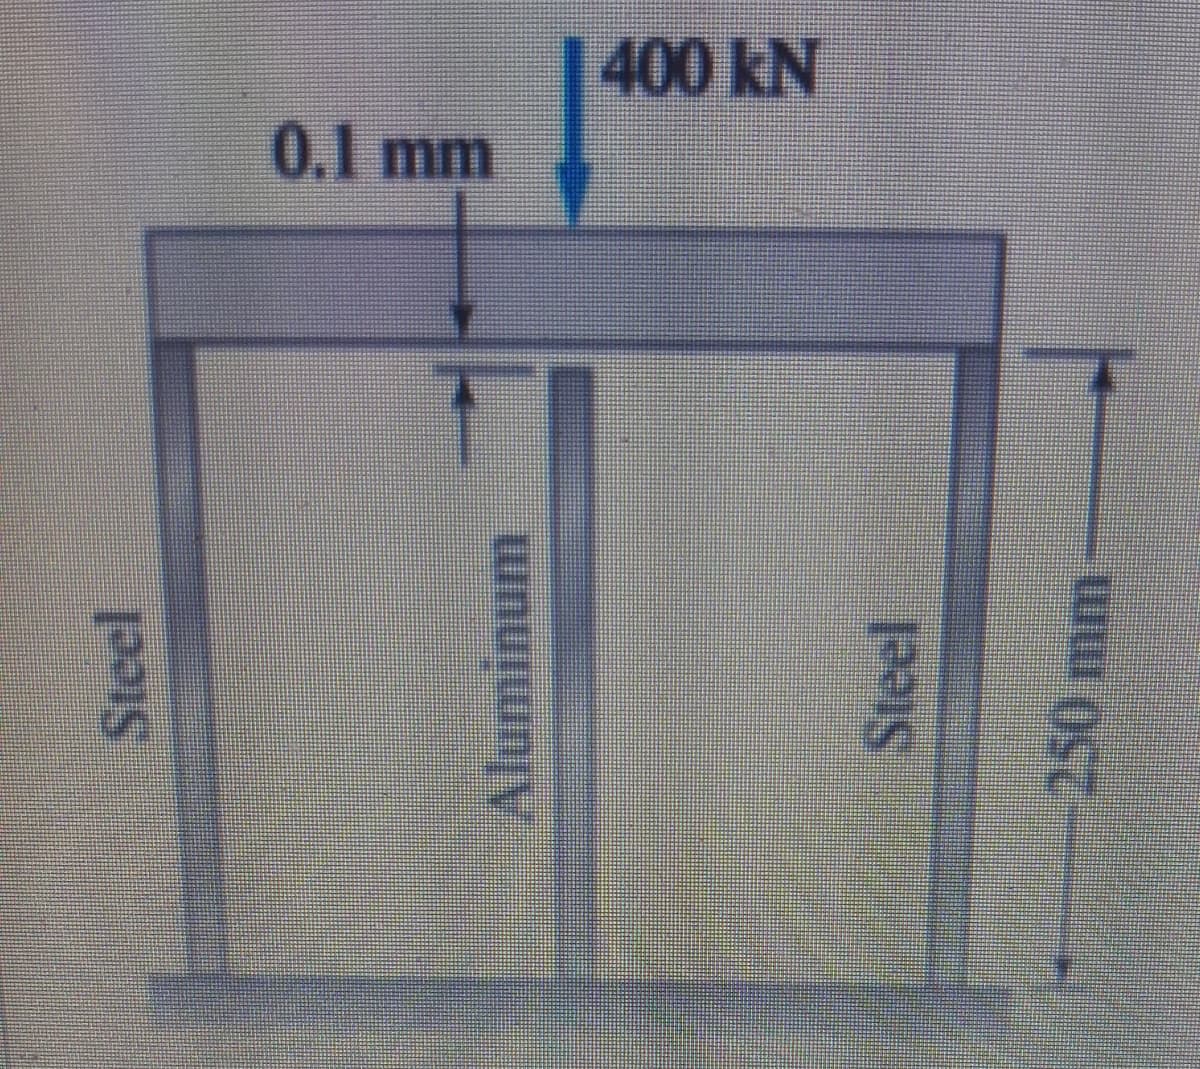 400 kN
0.1 mm
unujuny
Steel
